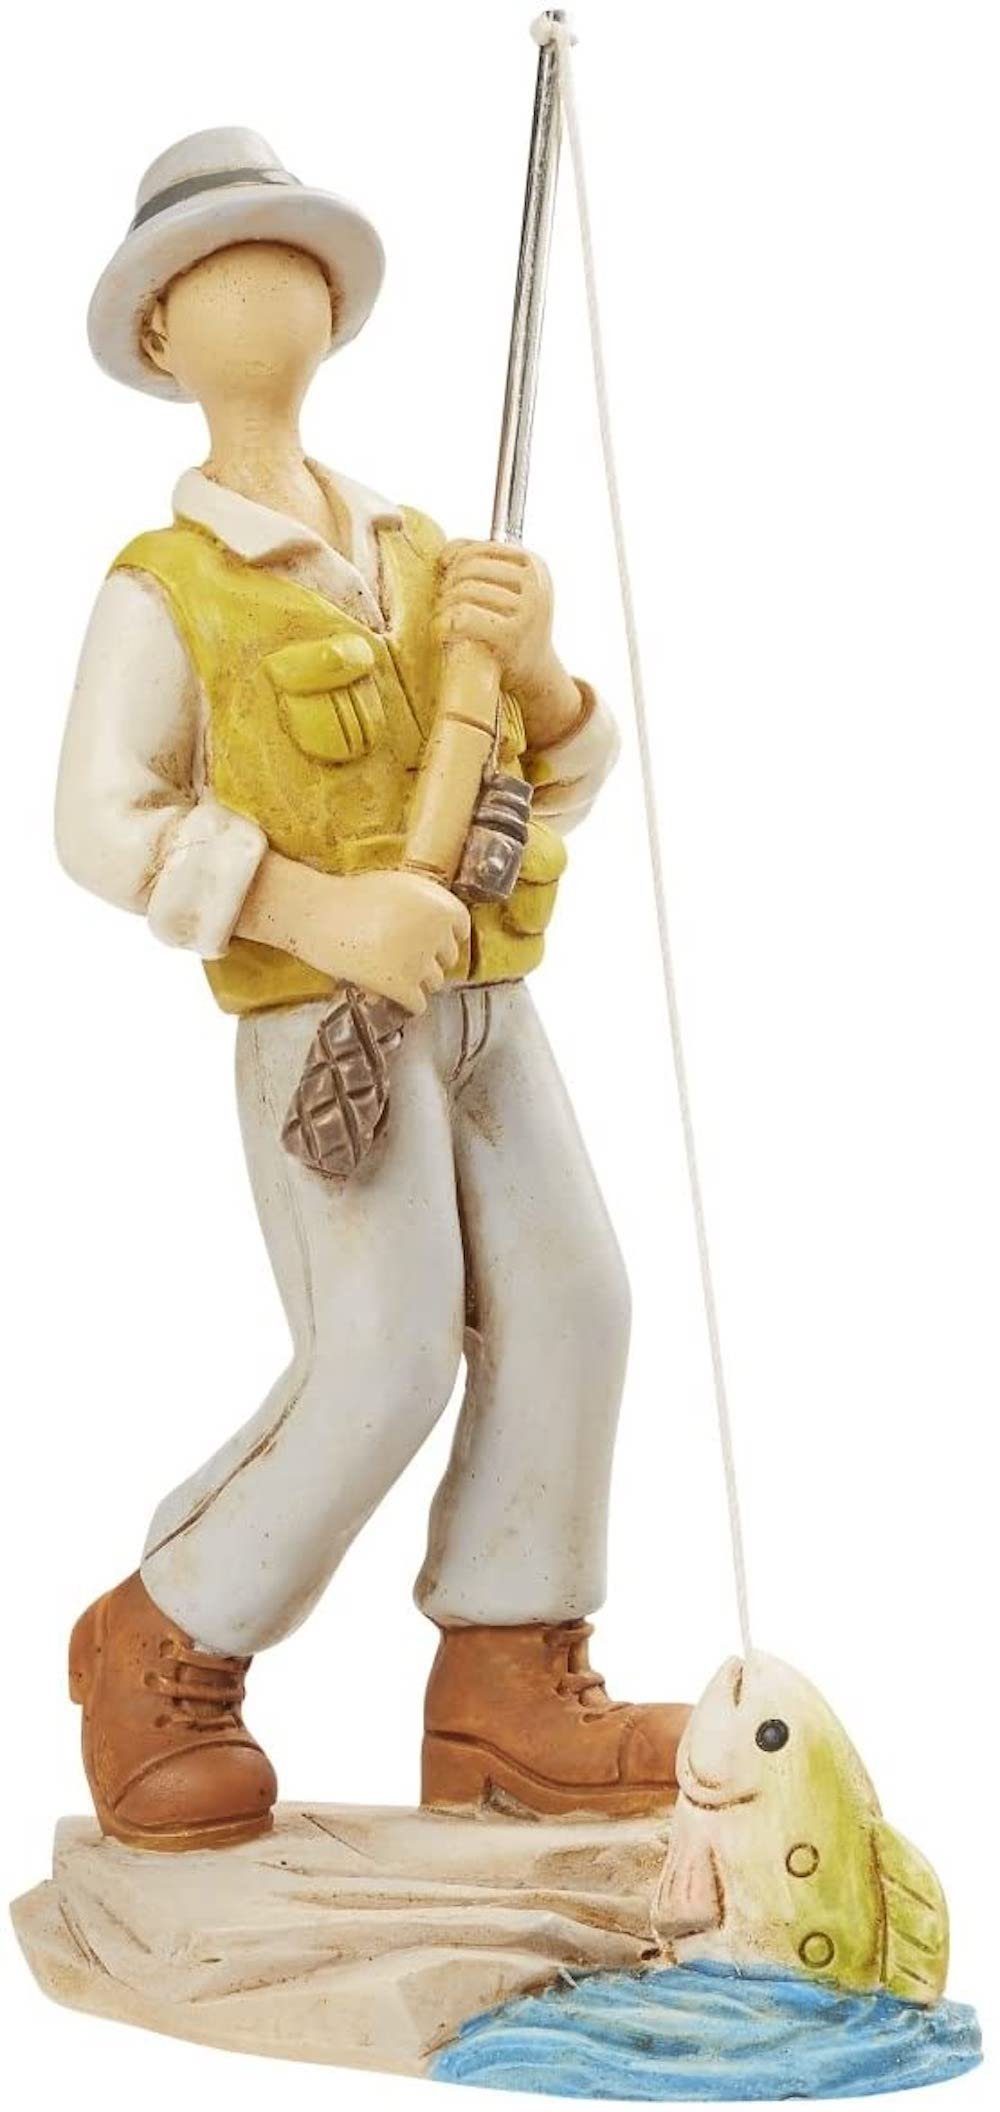 HobbyFun Dekofigur Angler mit Fisch am Haken, ca. 10 cm | Dekofiguren